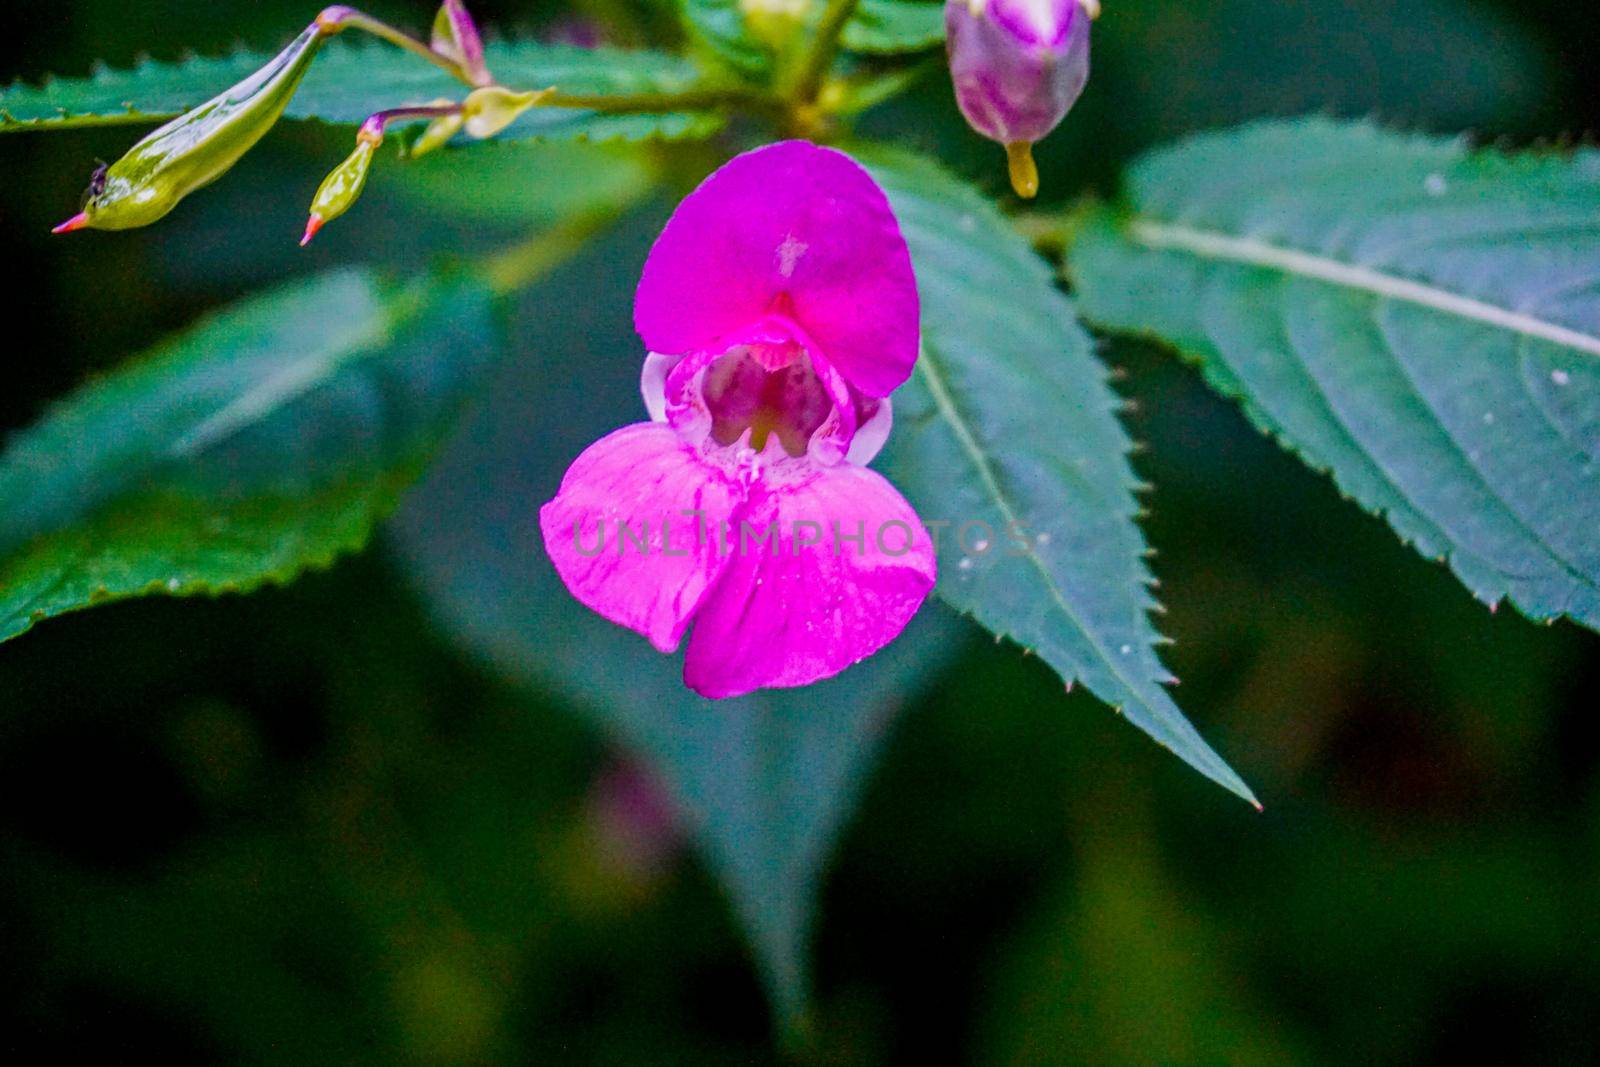 Single blossom of a pink Impatiens glandulifera flower